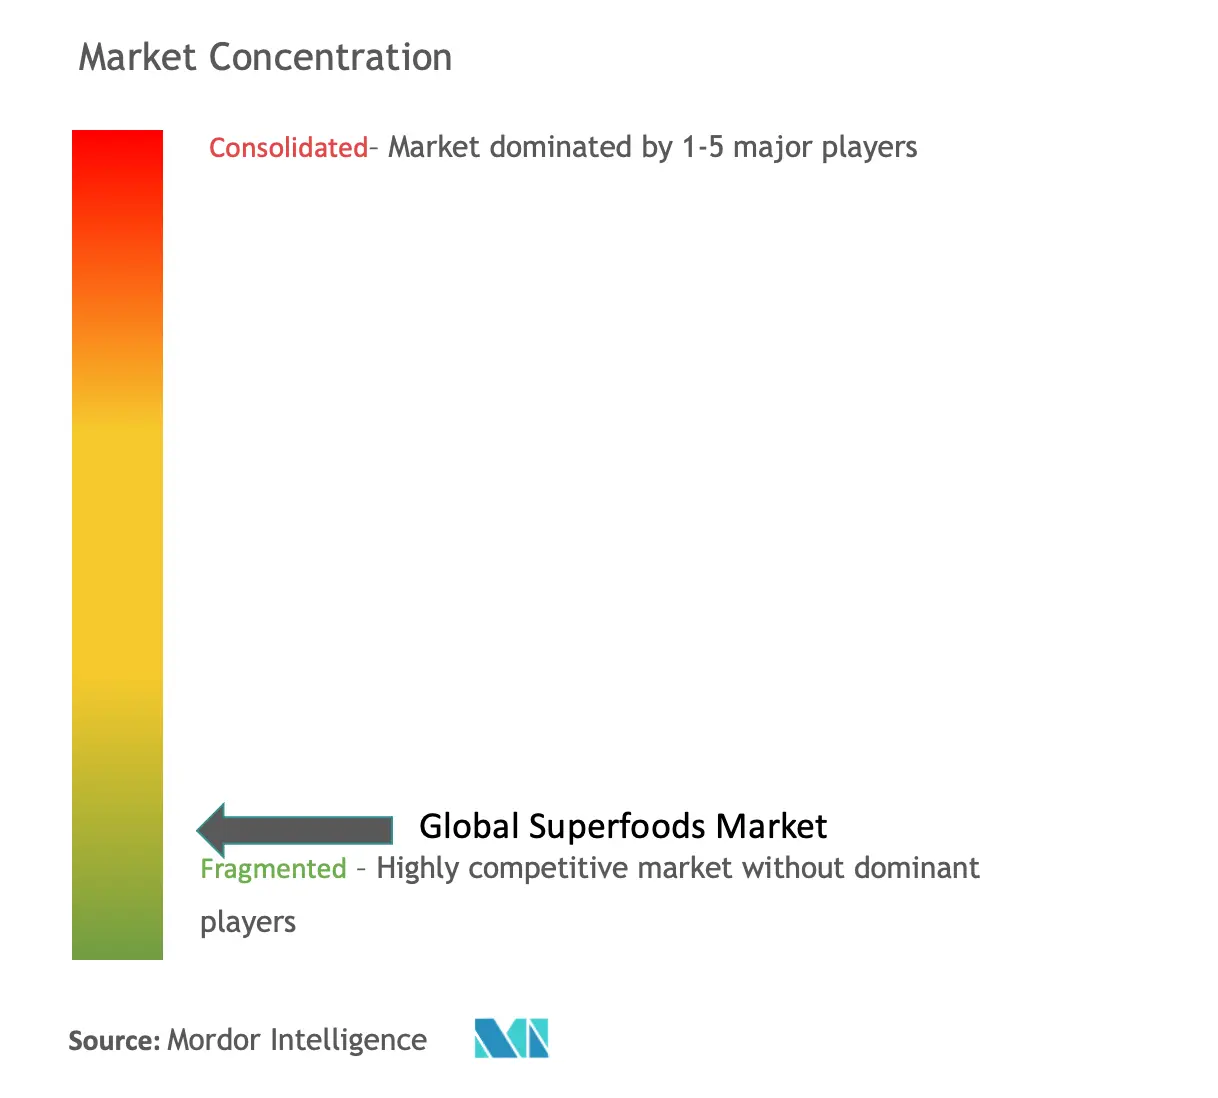 Superfoods Market Concentration